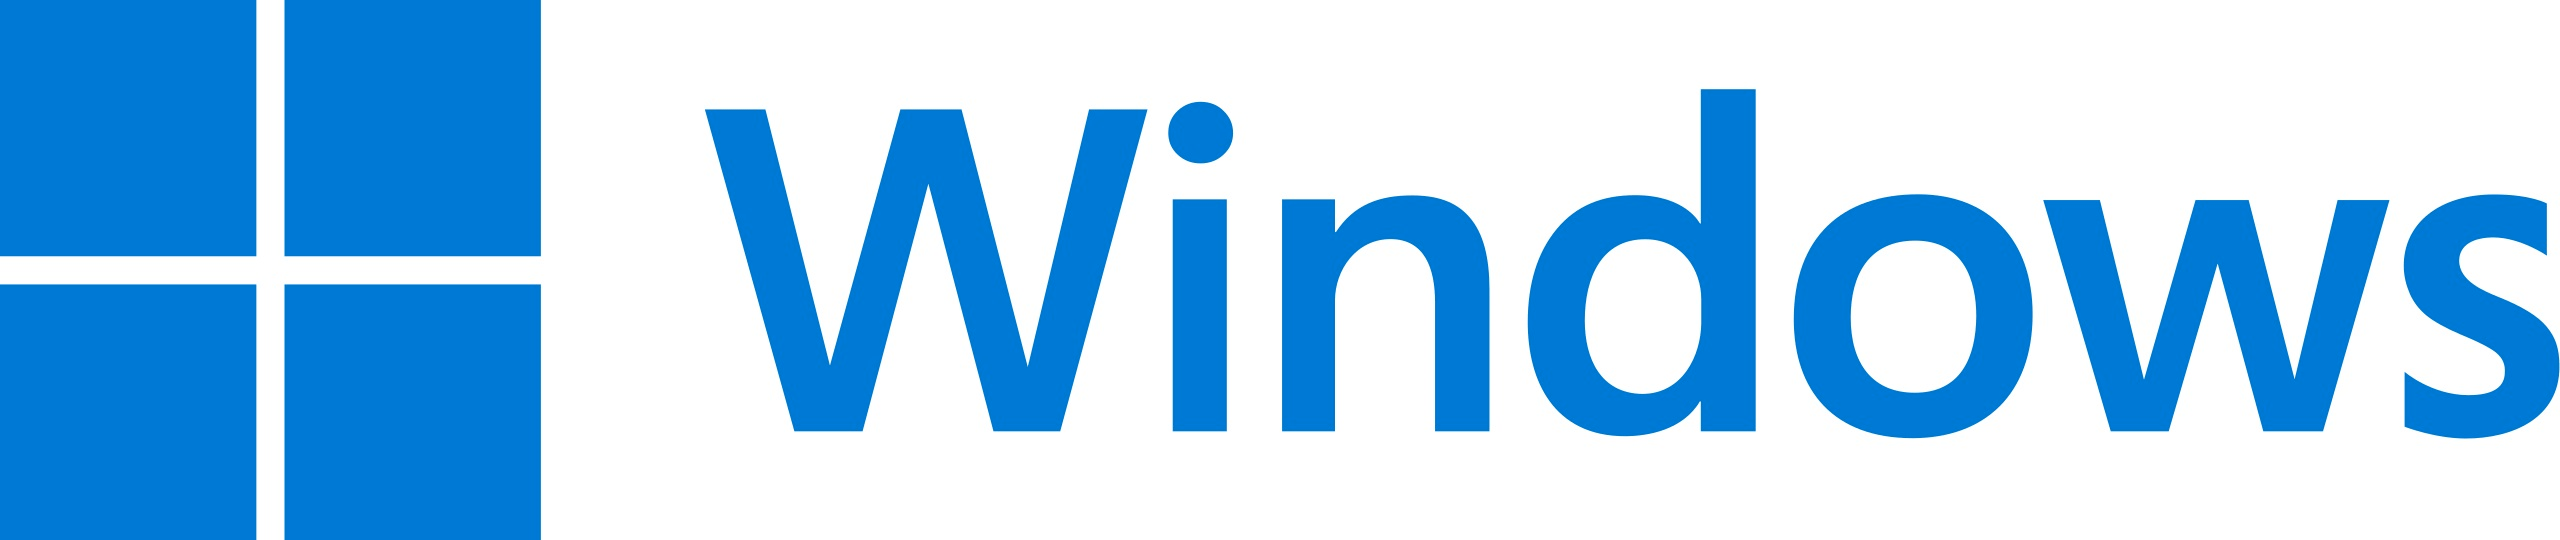 Windows_logo_and_wordmark_2021.png